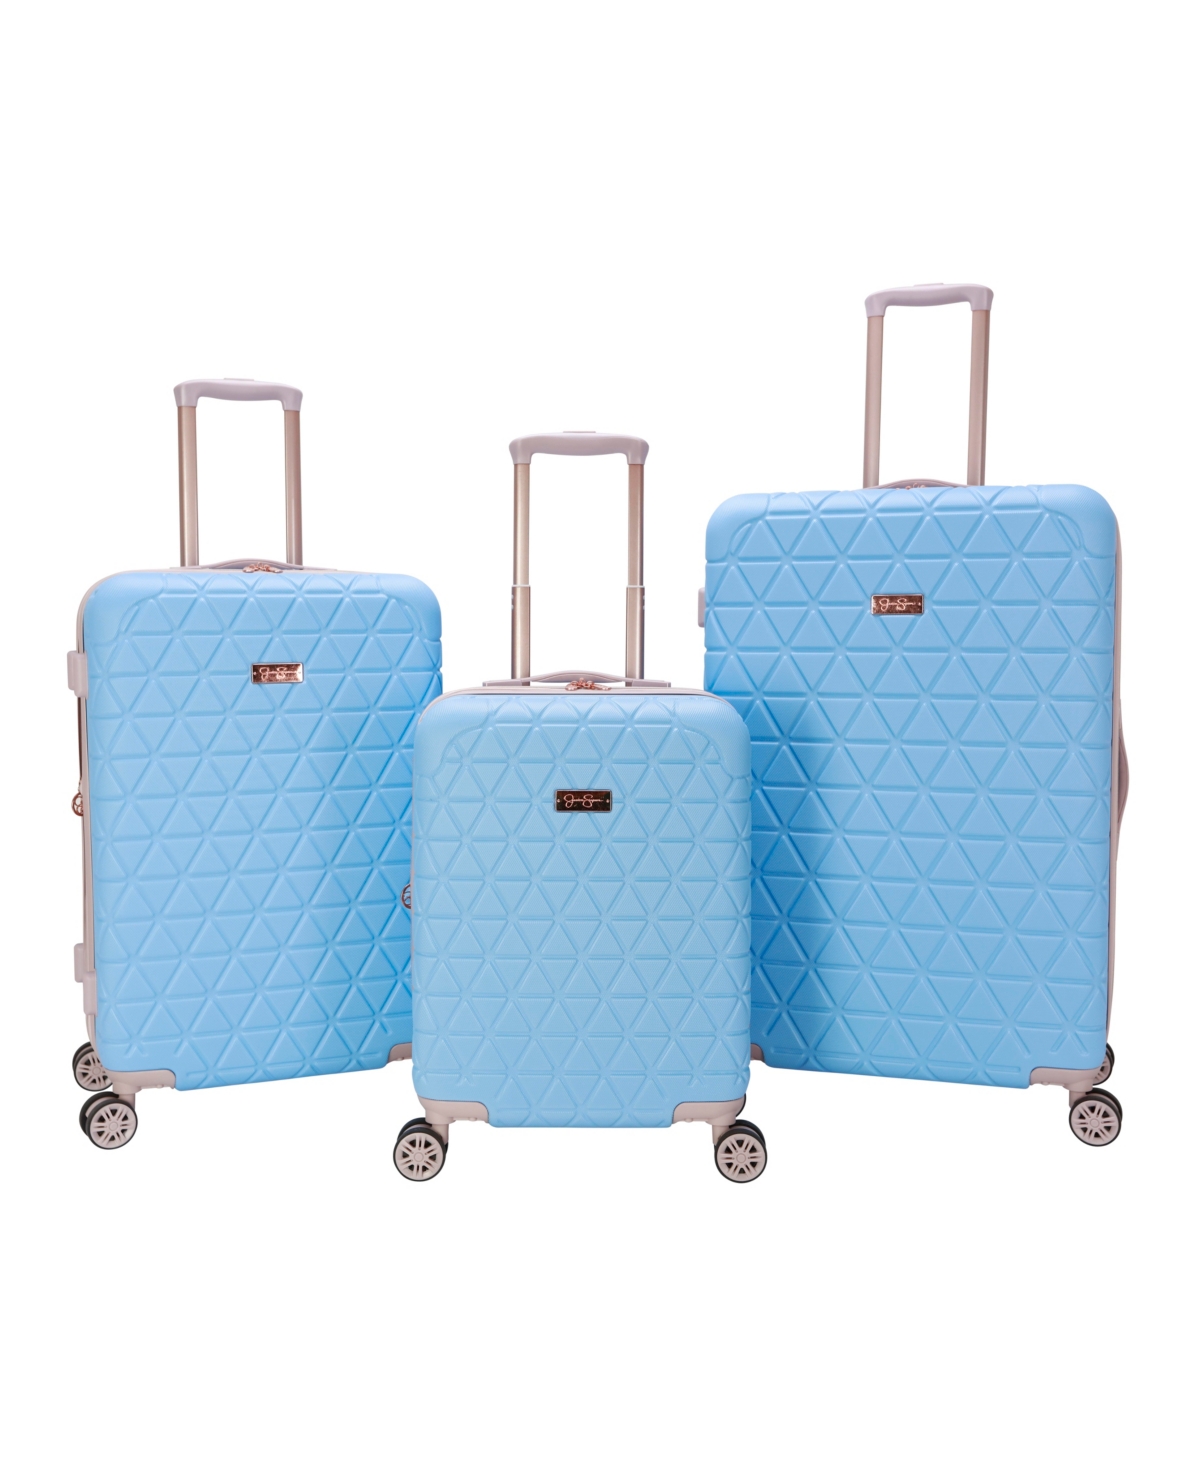 Jessica Simpson Dreamer 3 Piece Hardside Luggage Set In Light Blue